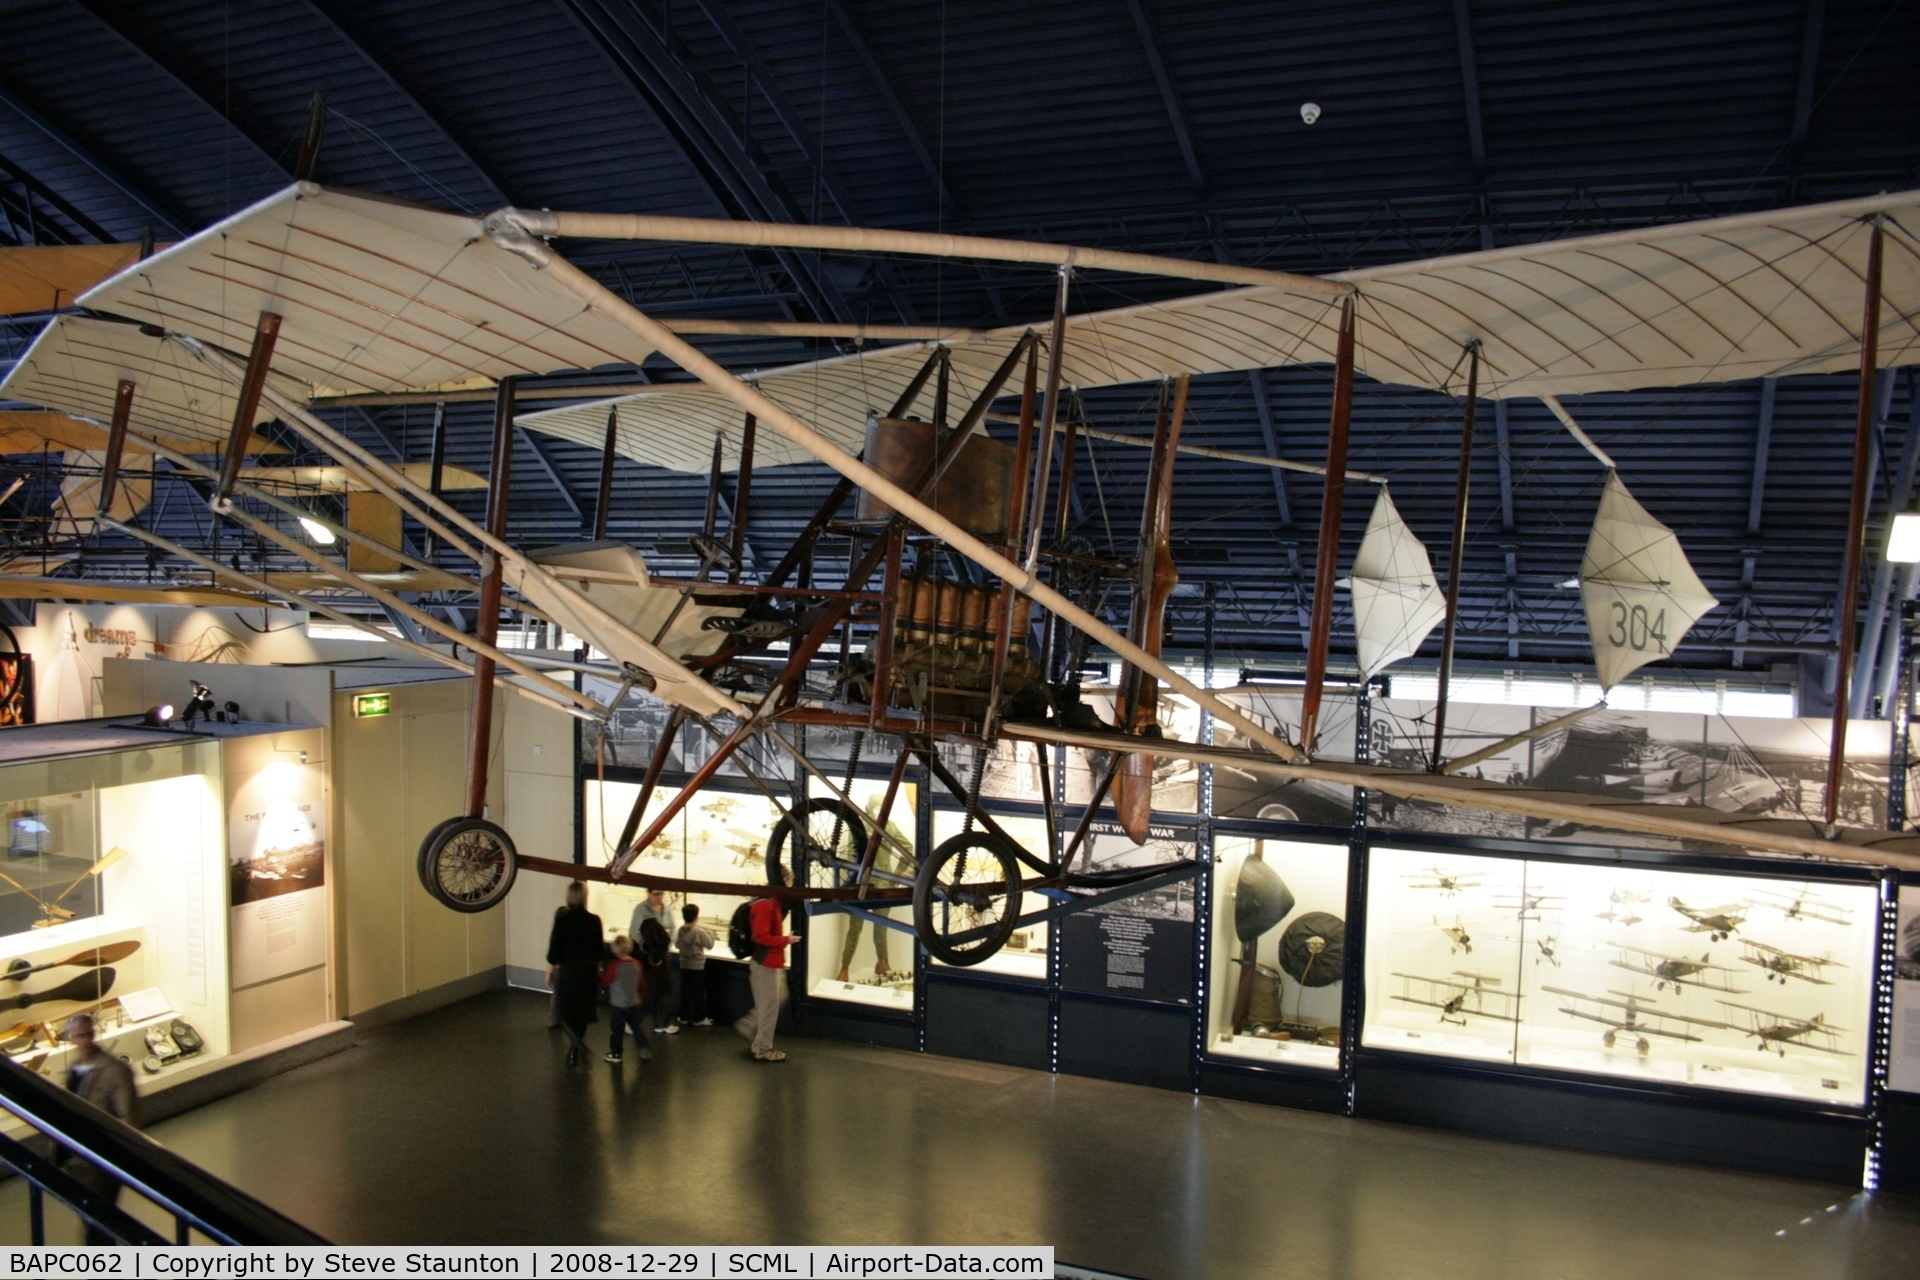 BAPC062, 1912 Cody V Biplane C/N BAPC.062, Taken at the Science Museum, London. December 2008